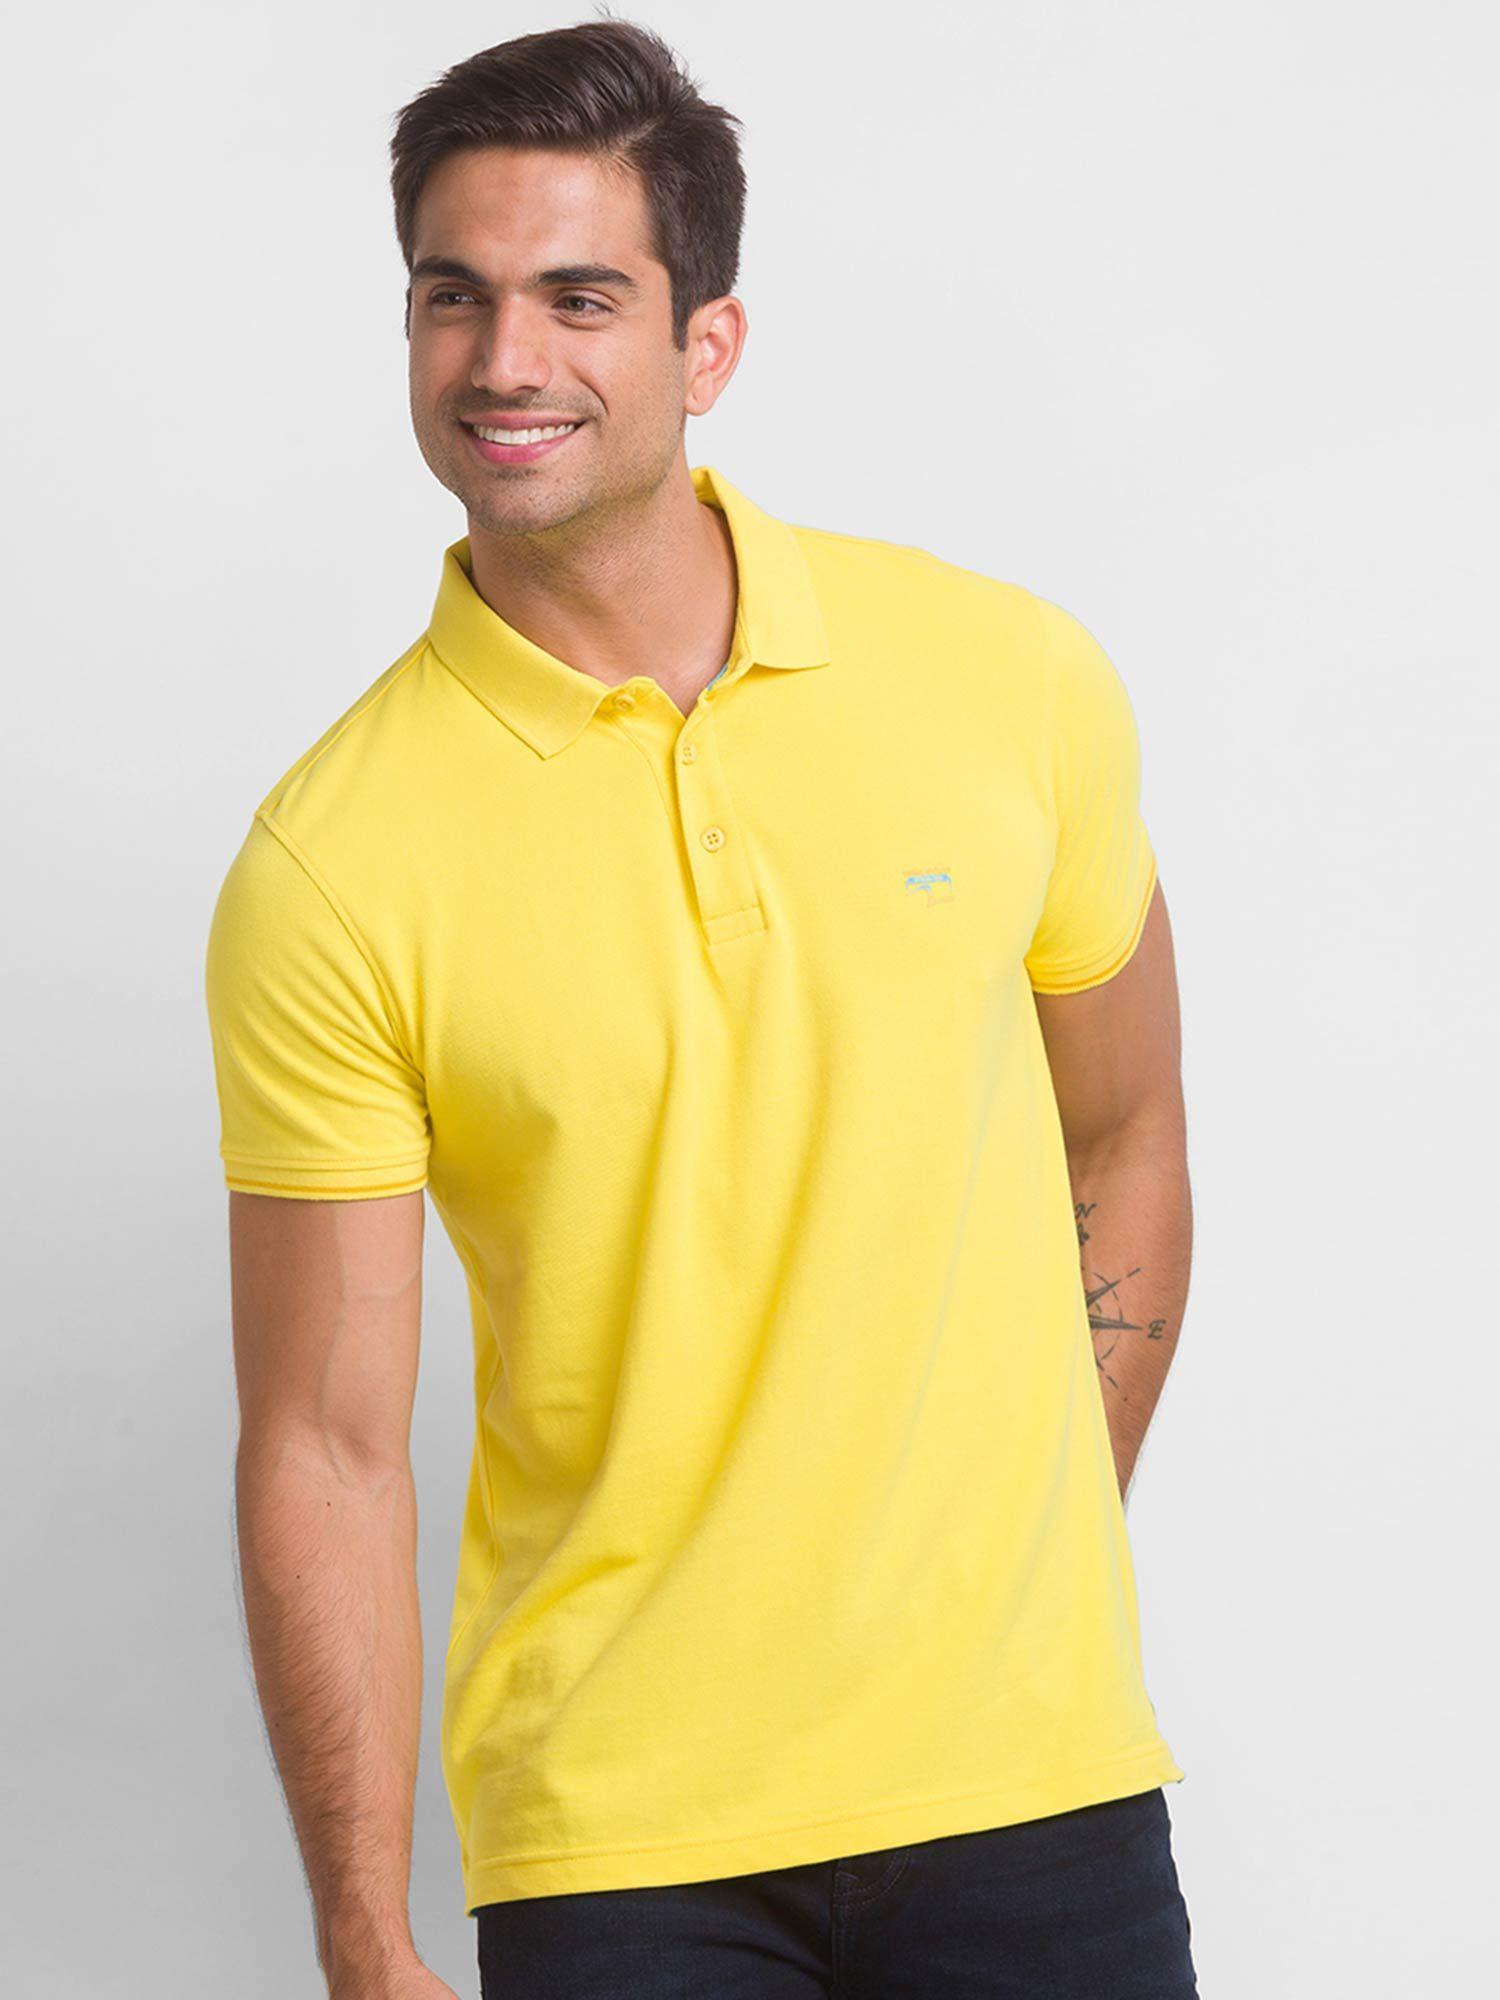 sulphur yellow cotton half sleeve plain casual polo t-shirt for men